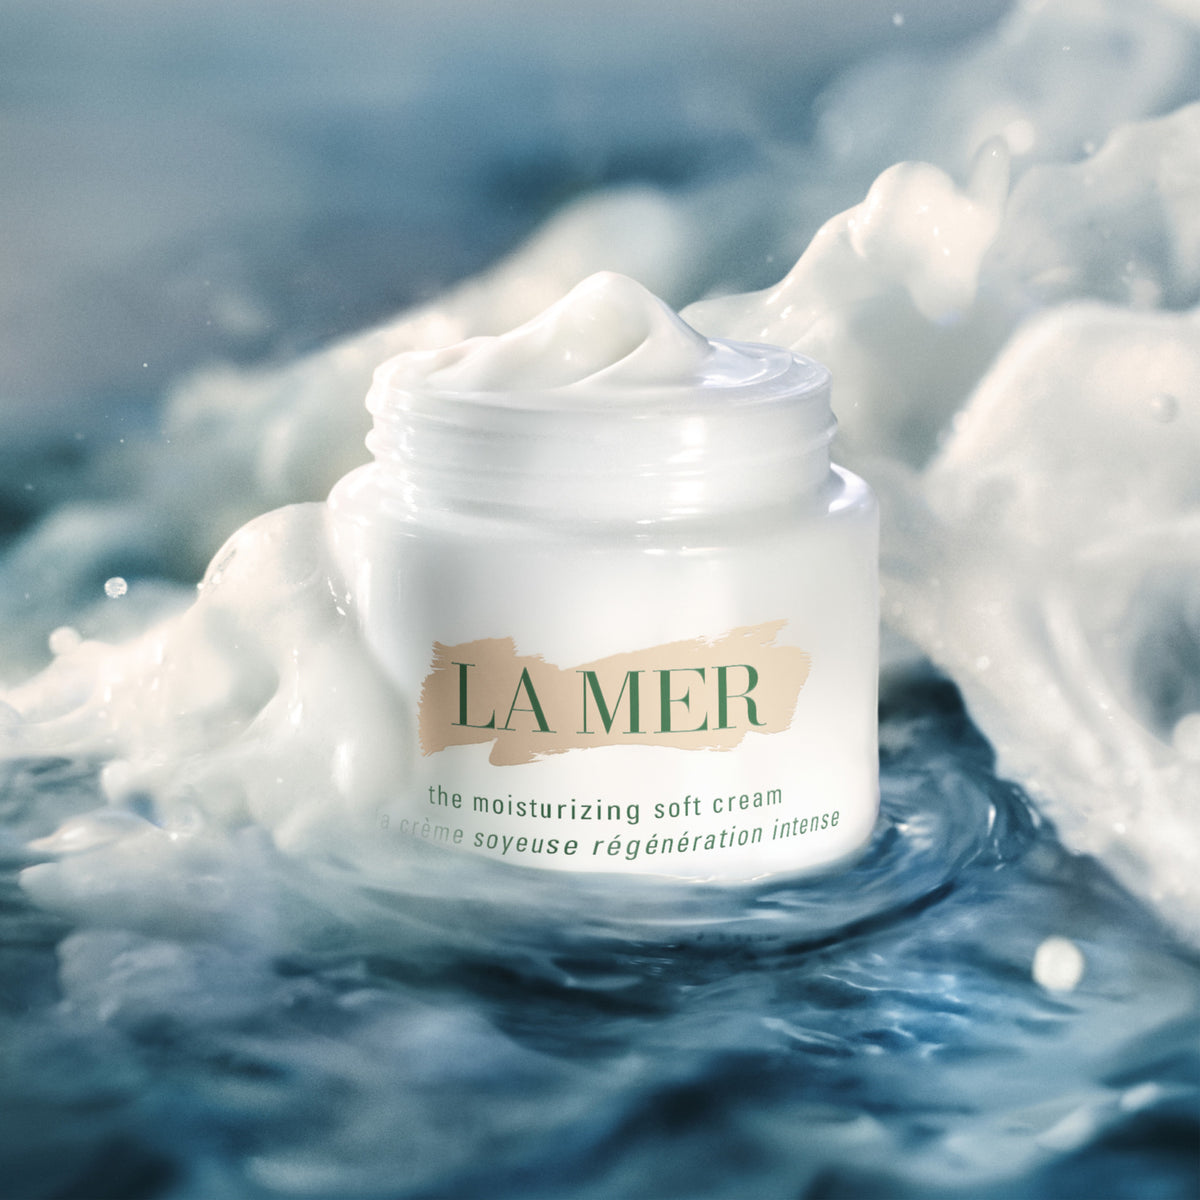 bluemercury – Soft Mer La Moisturizing The Cream